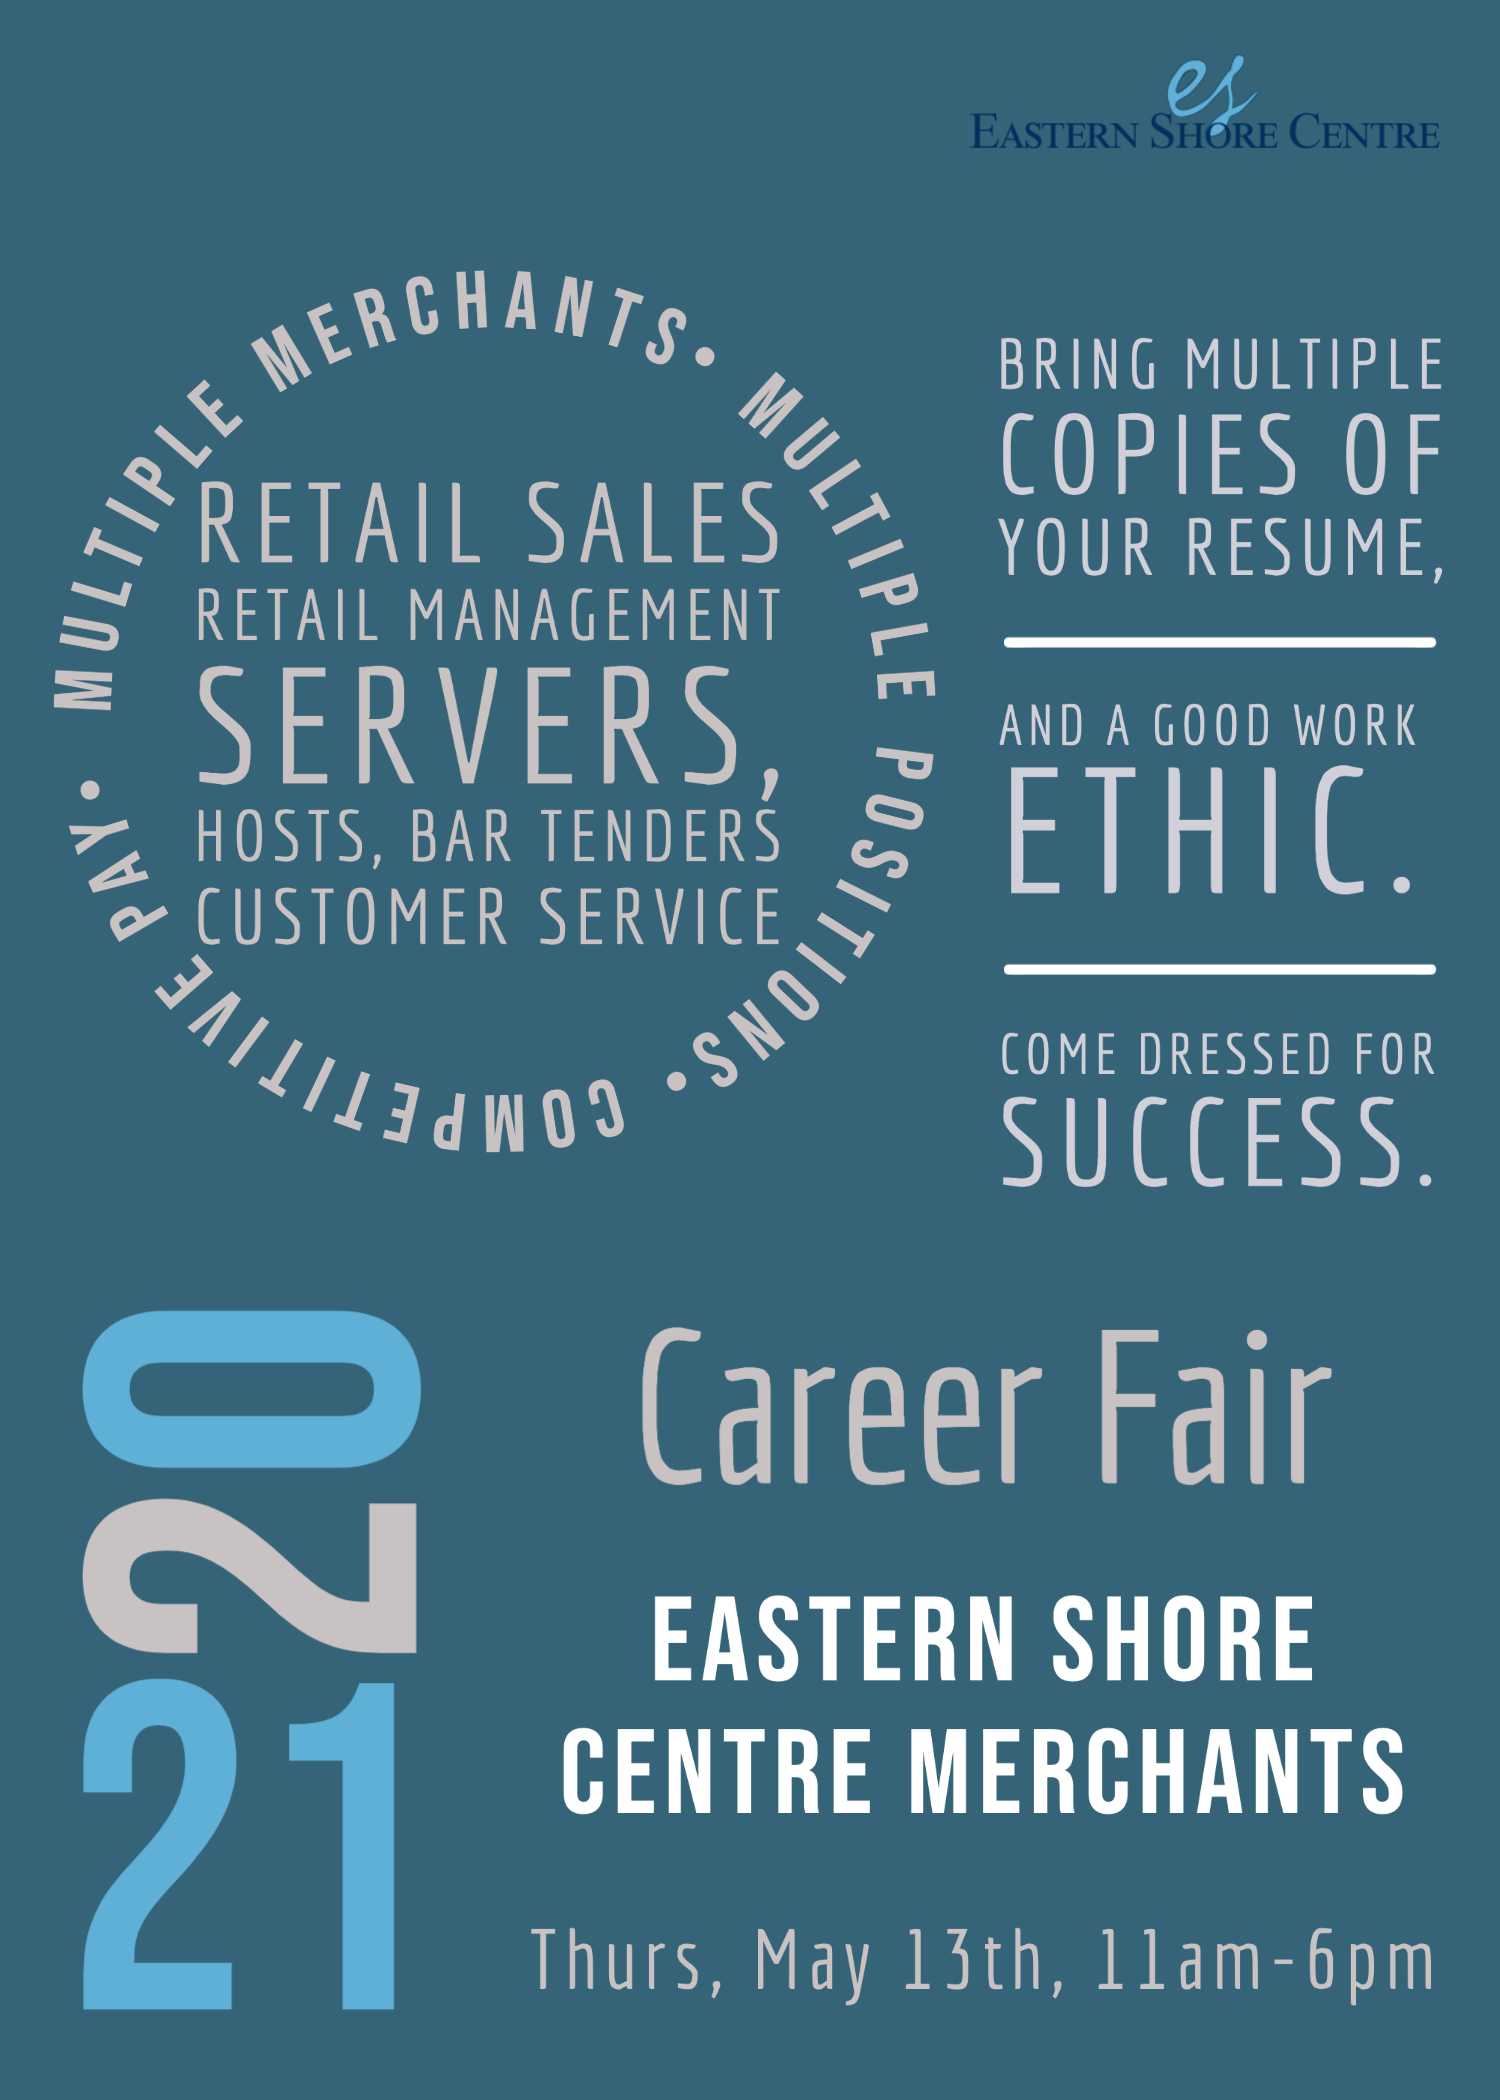 Job Fair at Eastern Shore Centre